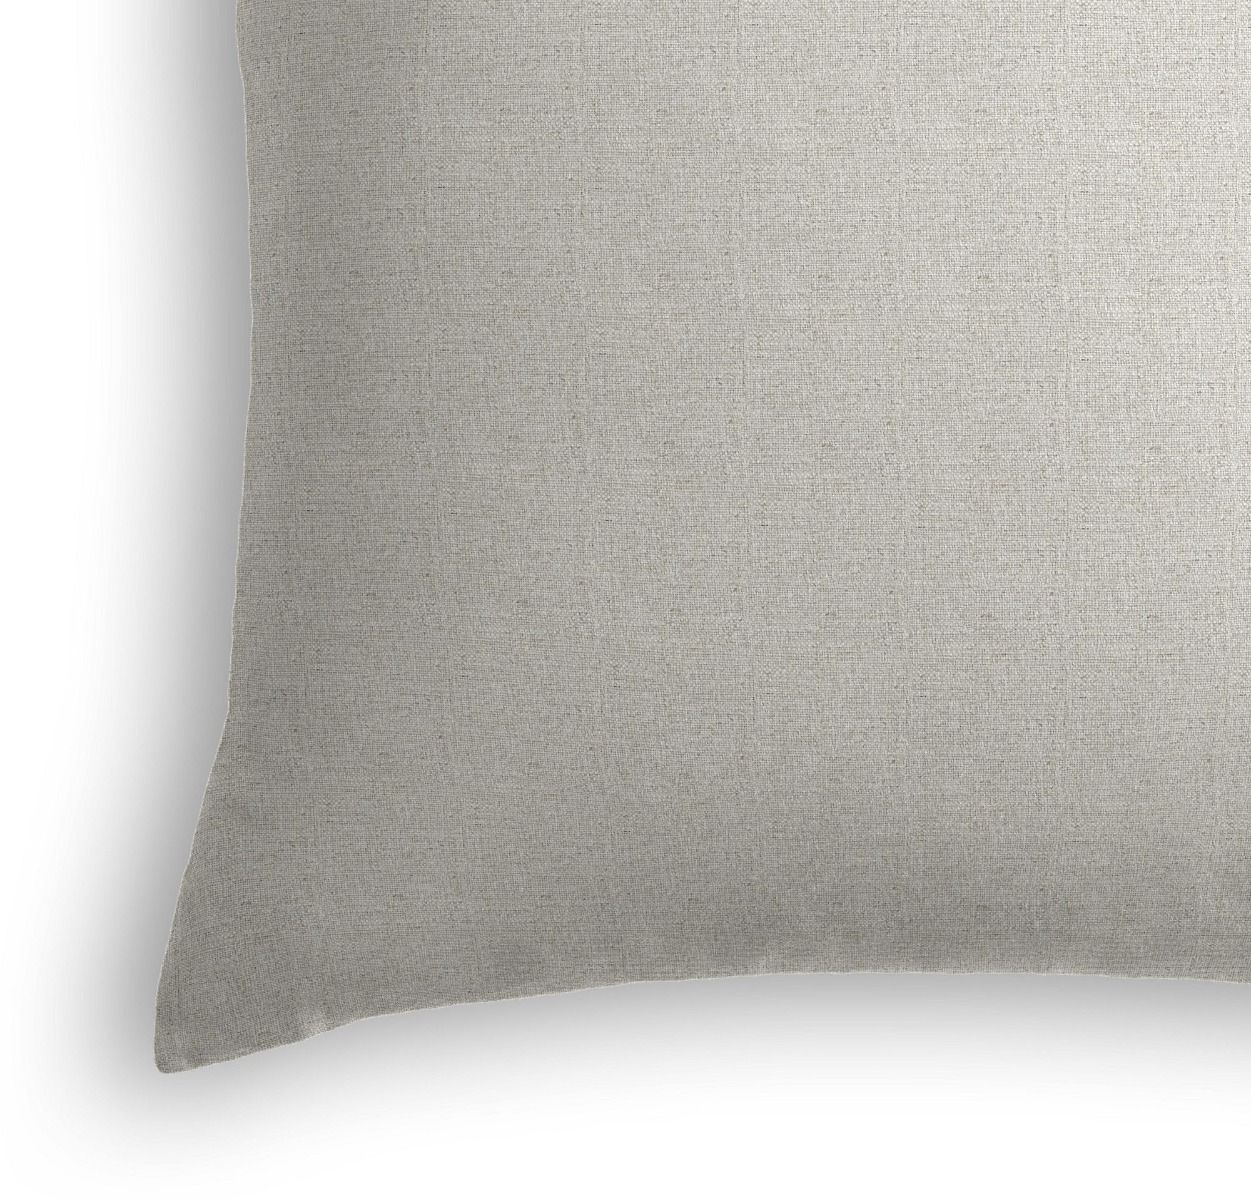 Classic Linen Pillow, Sandy Tan, 20" x 20" - Image 1